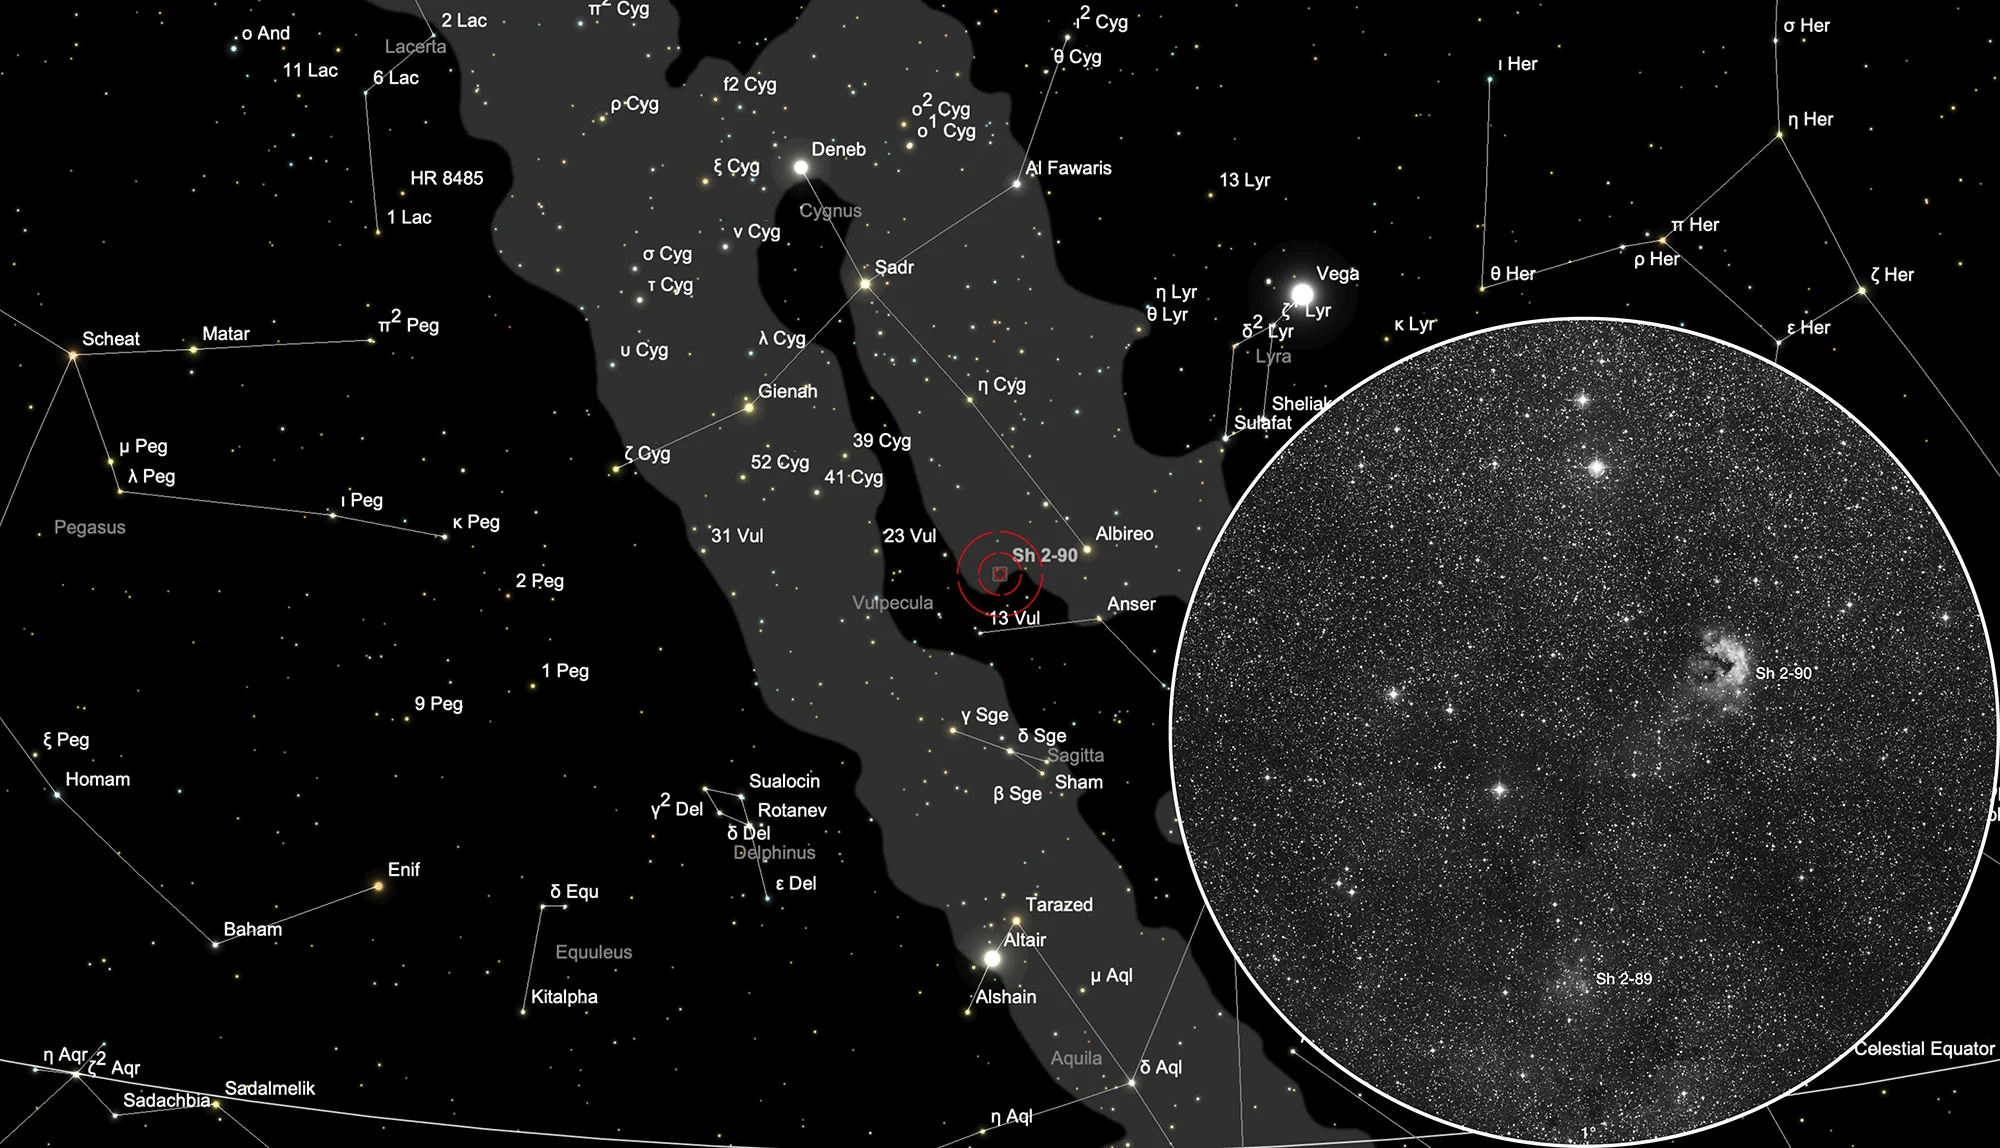 Chart Galactic Nebulae Sh 2-89 and Sh 2-90